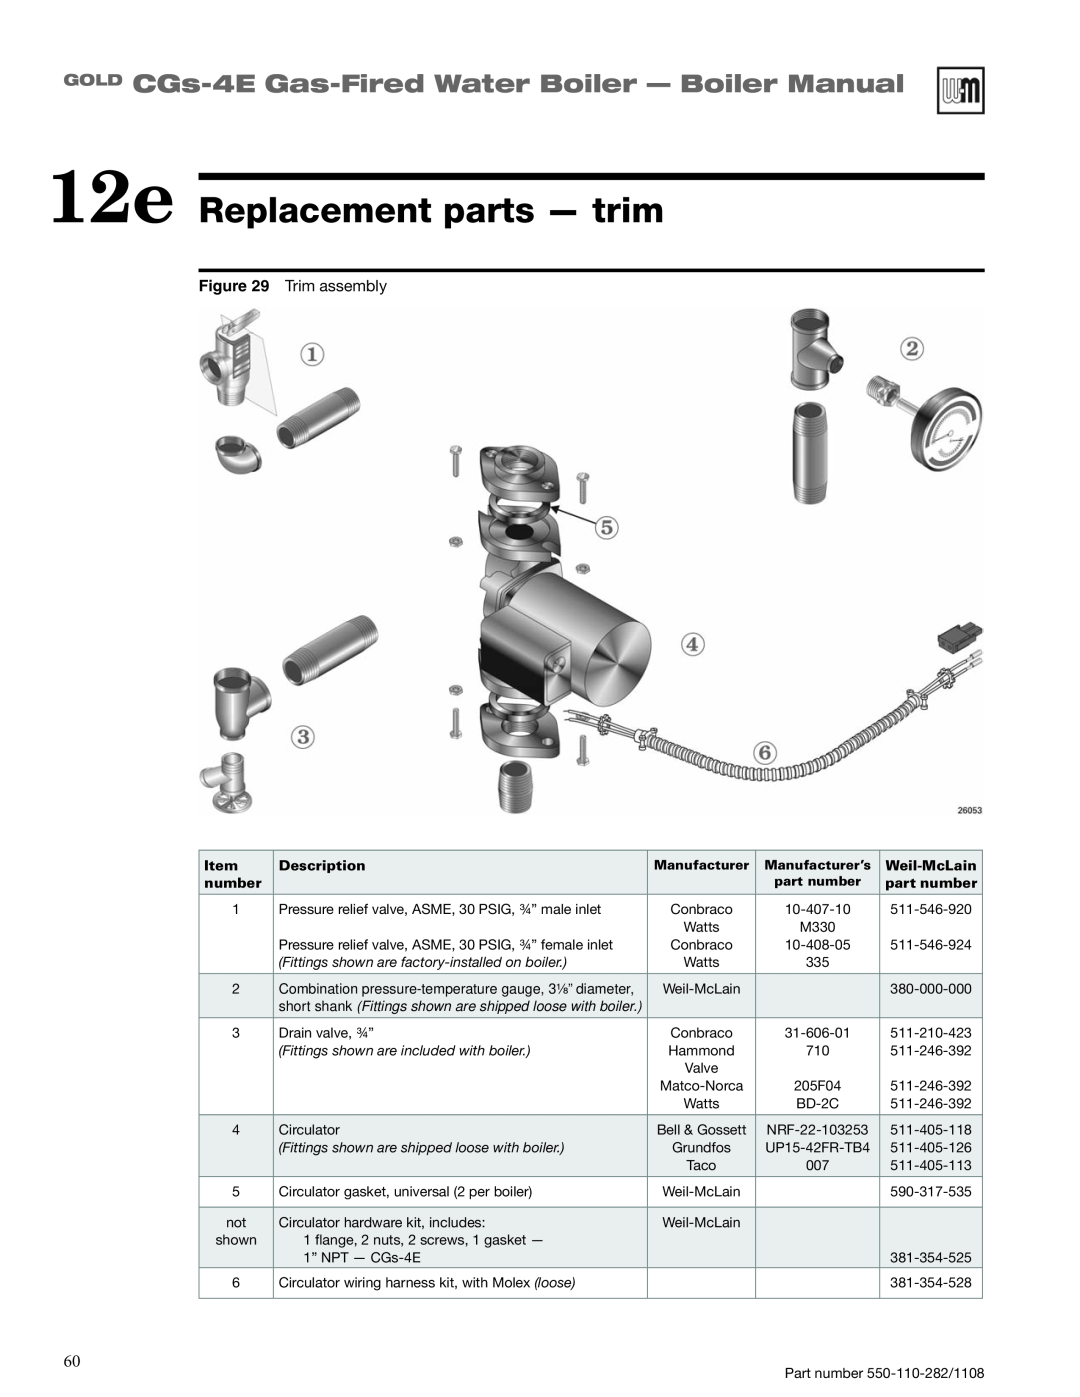 Weil-McLain CGS-4E manual 12e Replacement parts - trim, GOLD CGs-4E Gas-FiredWater Boiler - Boiler Manual 